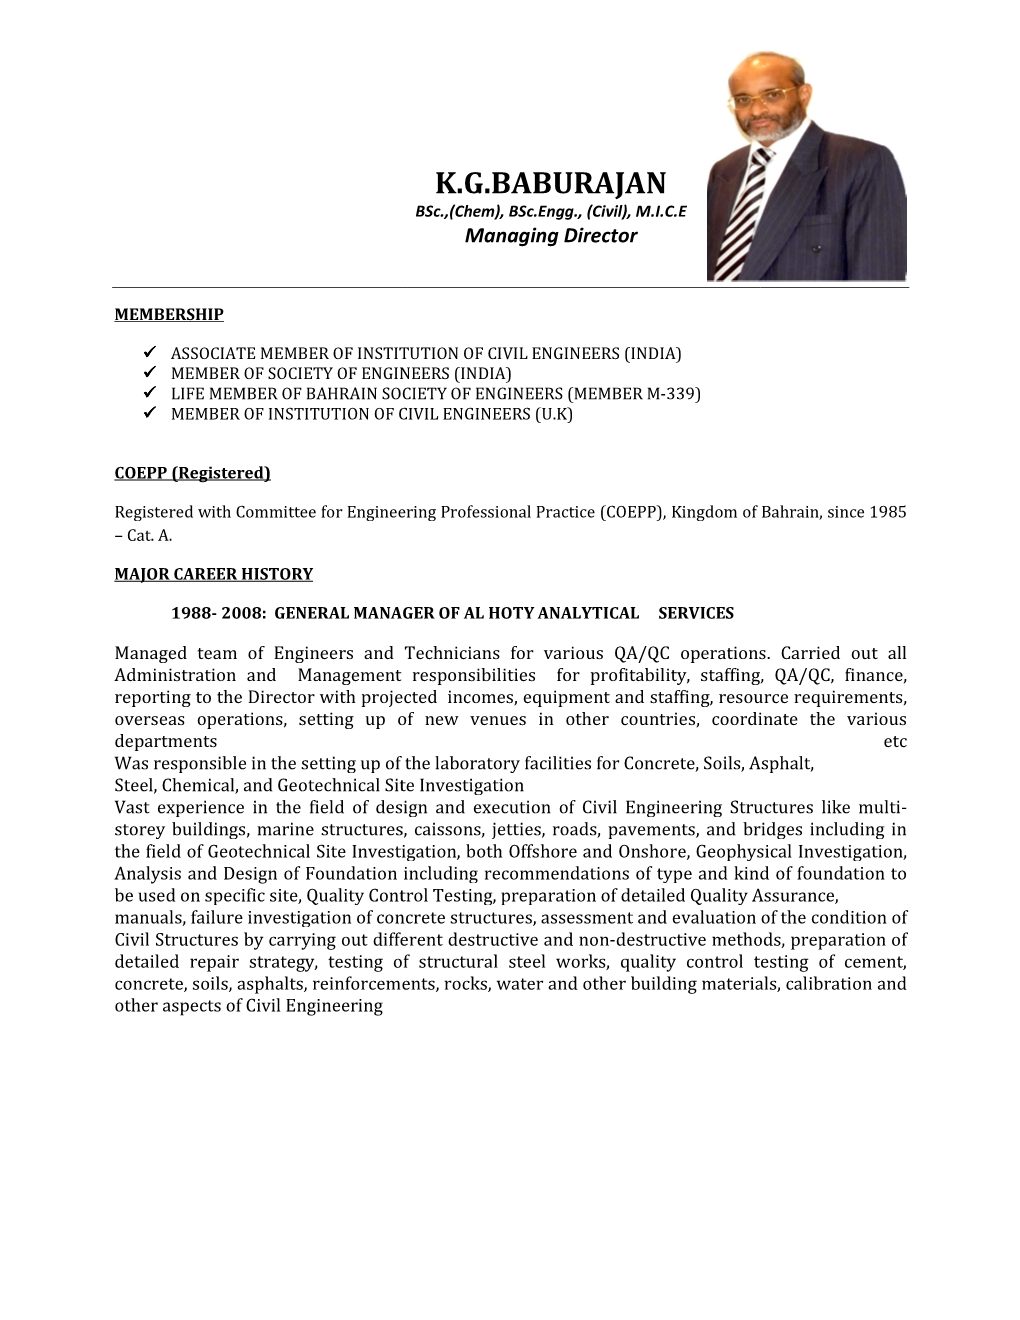 K.G.BABURAJAN Bsc.,(Chem), Bsc.Engg., (Civil), M.I.C.E Managing Director